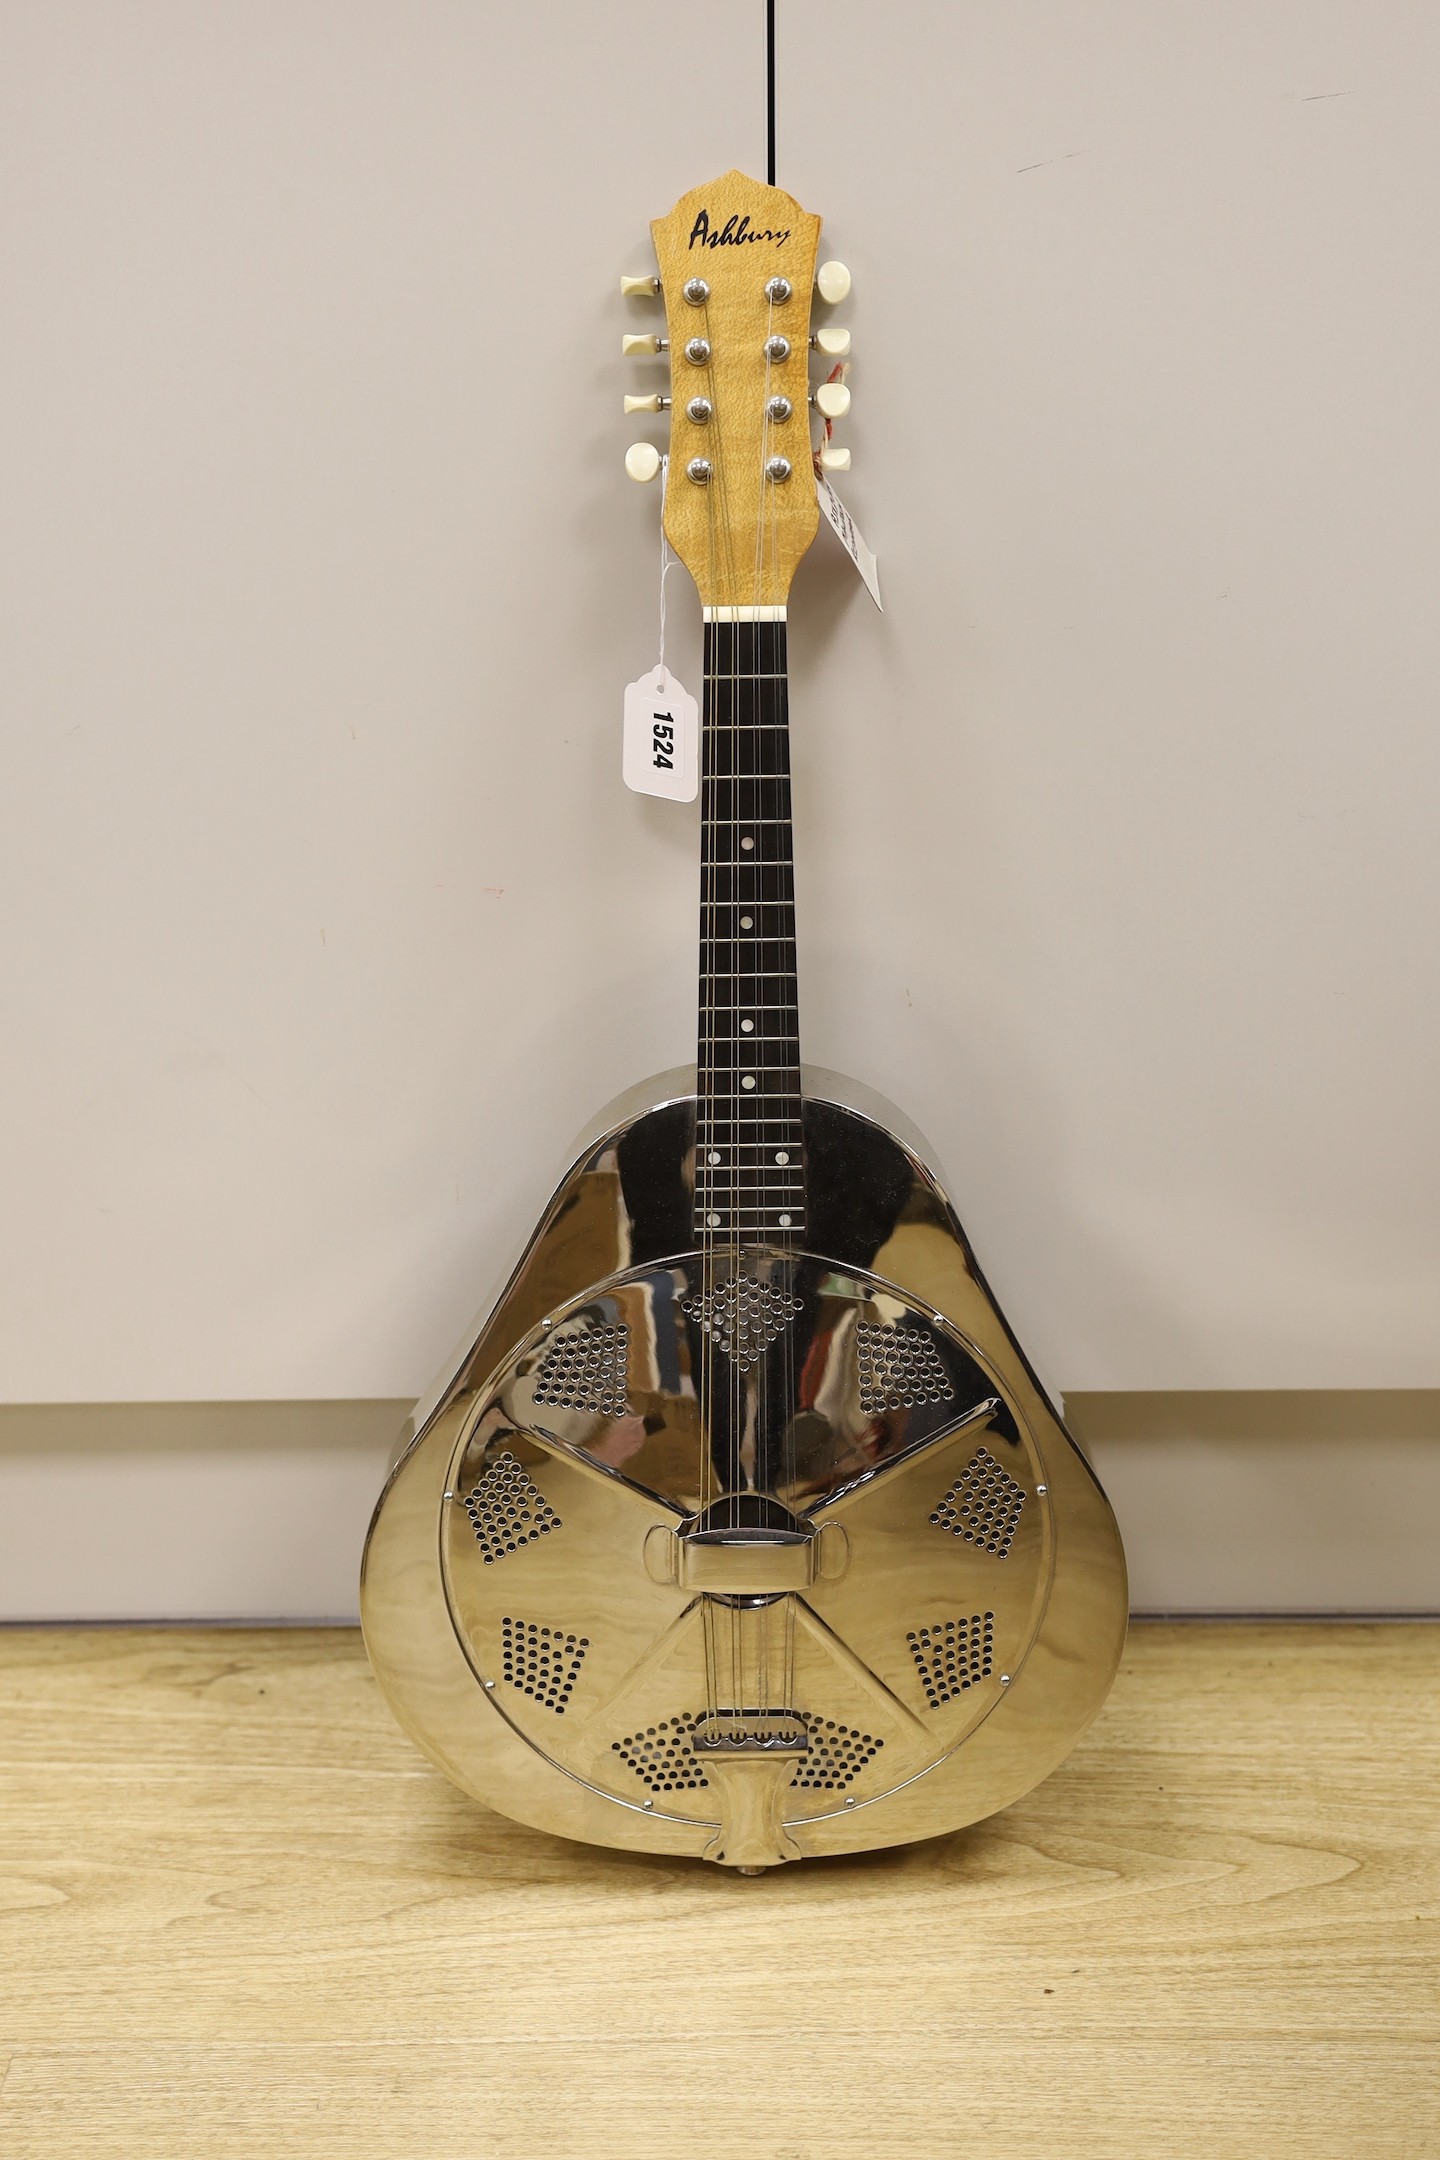 An Ashbury mandolin ‘Resonator’ with fitted, padded case, mandolin 69 cms high.